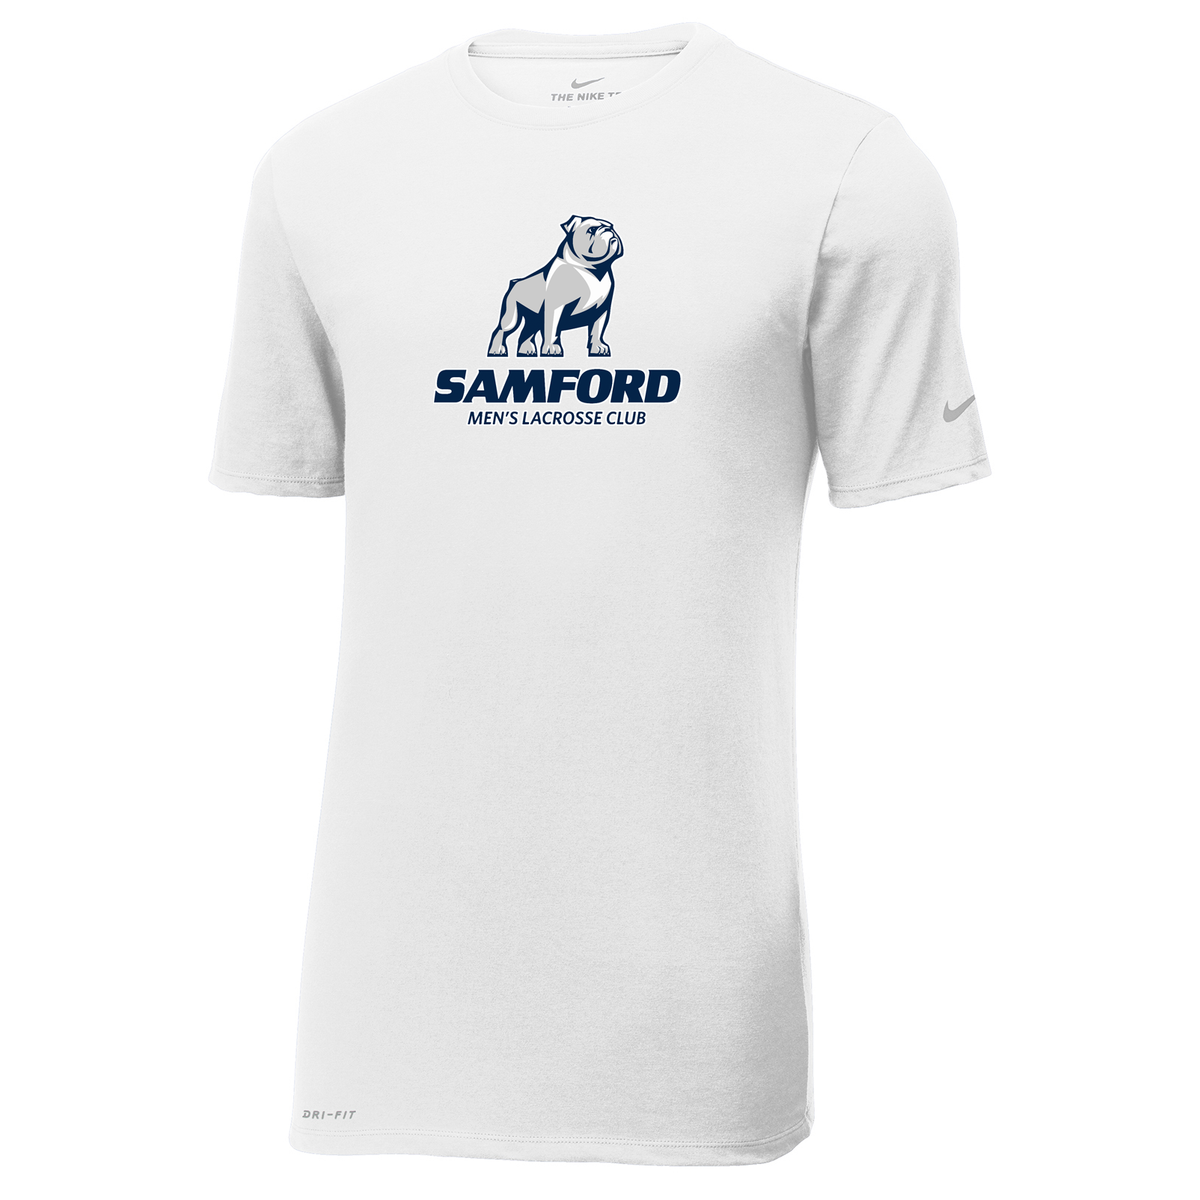 Samford University Lacrosse Club Nike Dri-FIT Tee